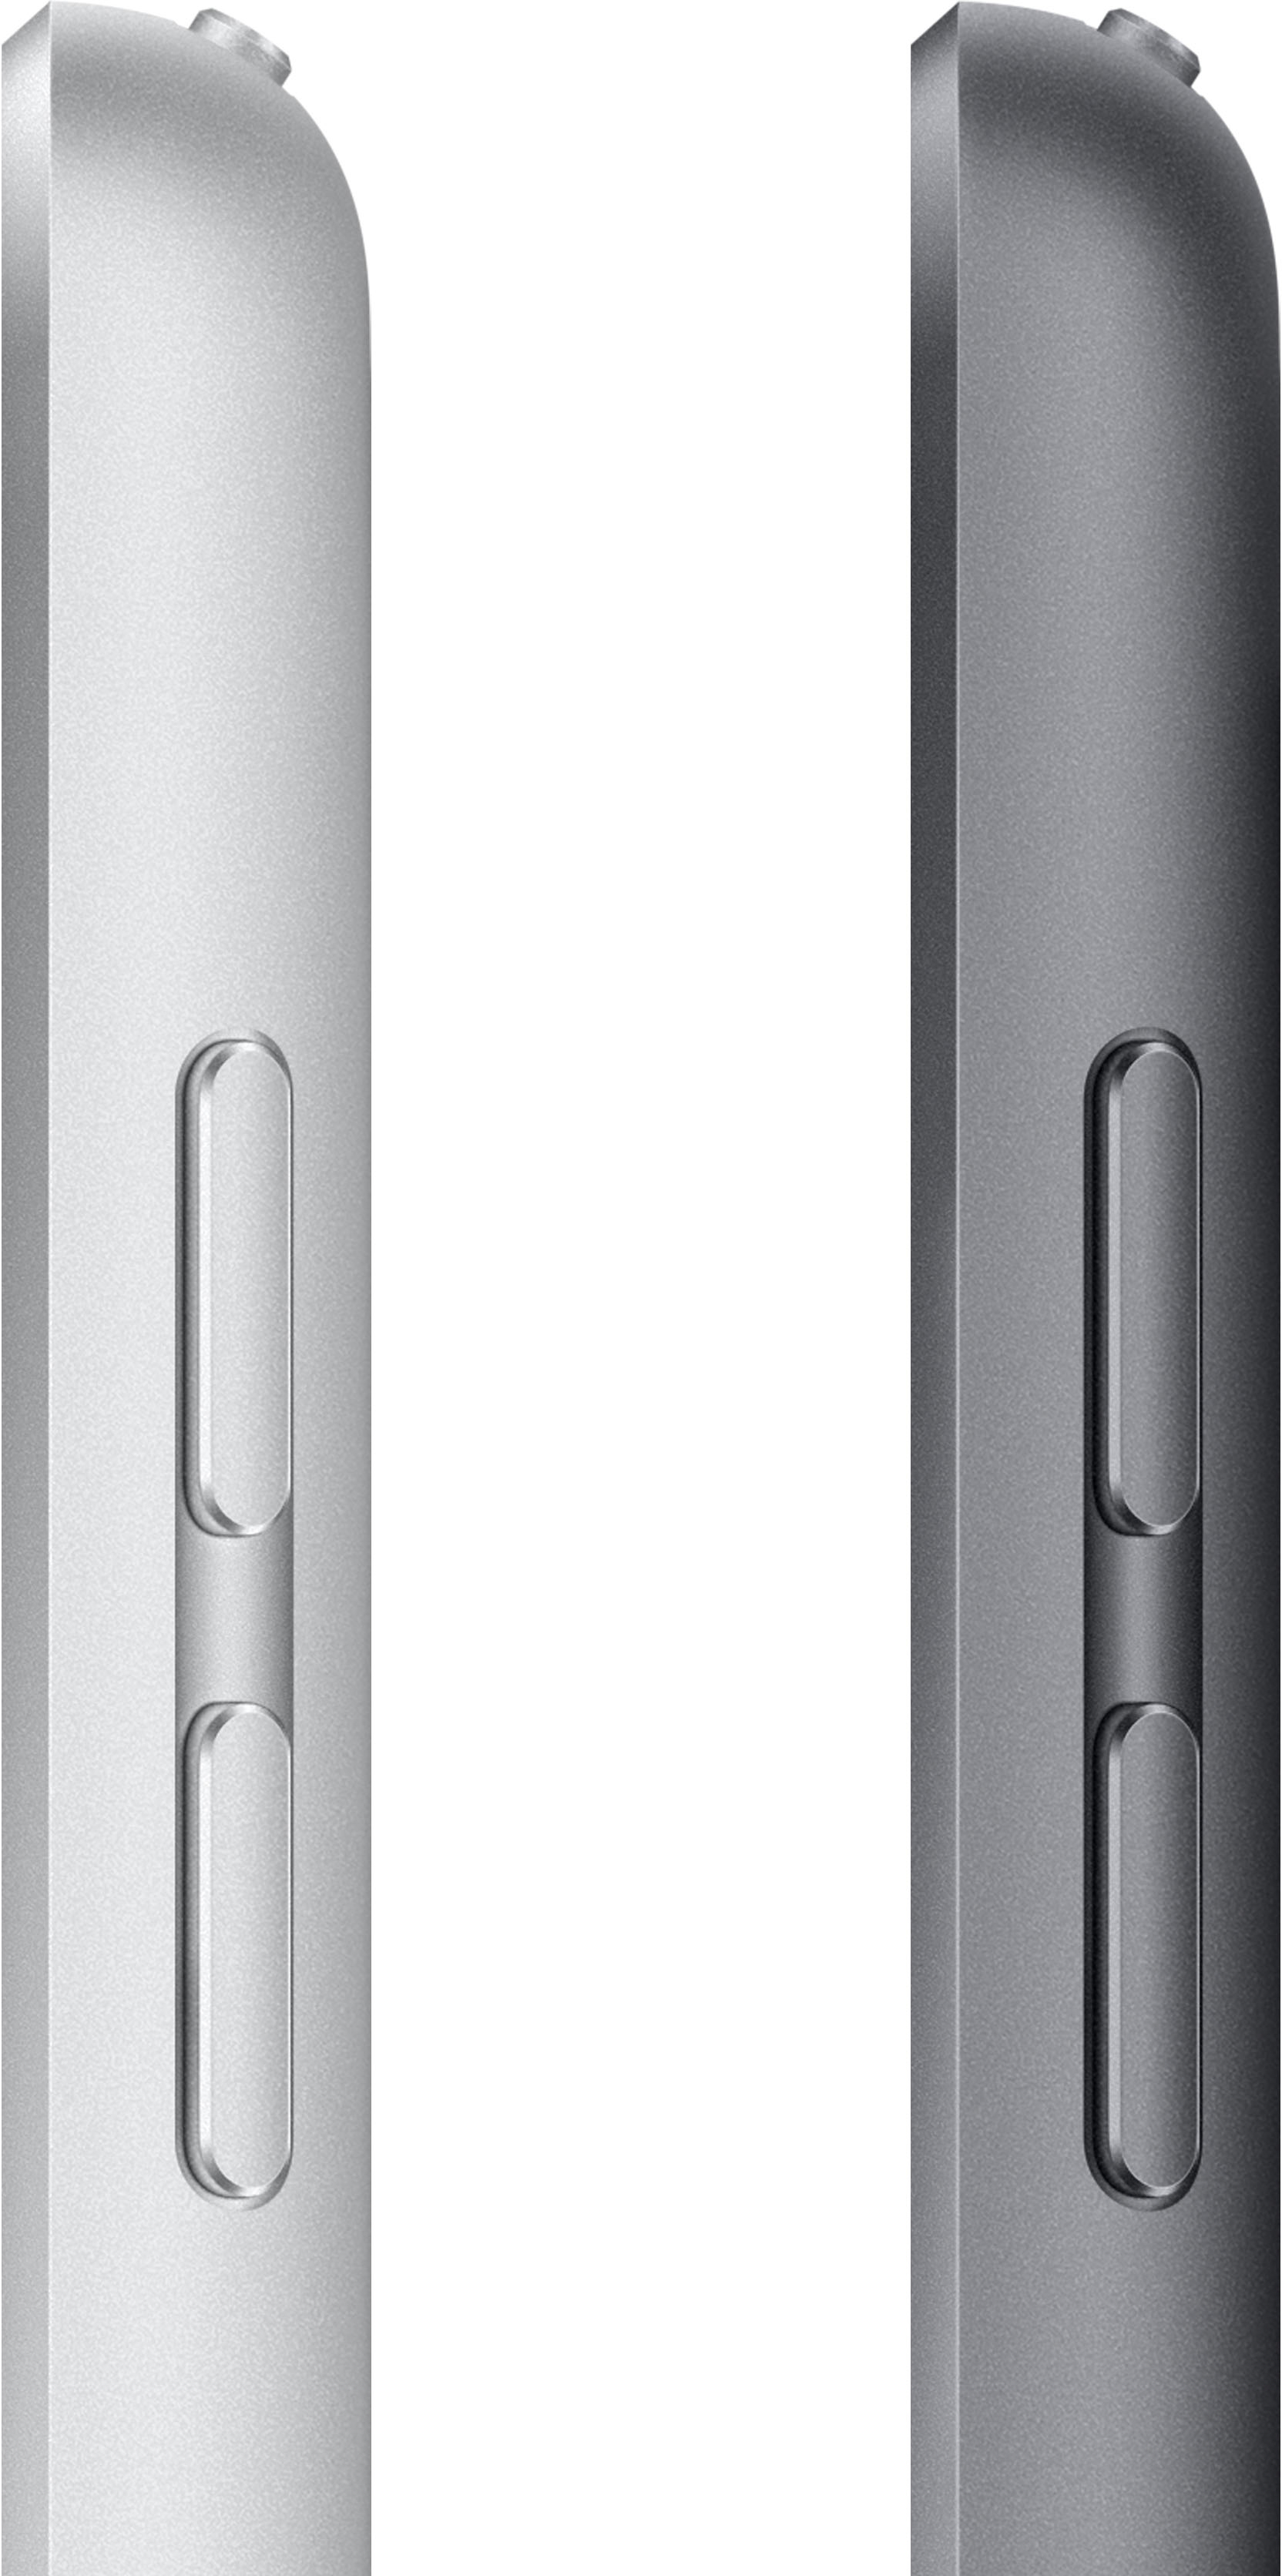 Apple 10.2-Inch iPad with Wi-Fi 64GB Space Gray MK2K3LL/A - Best Buy